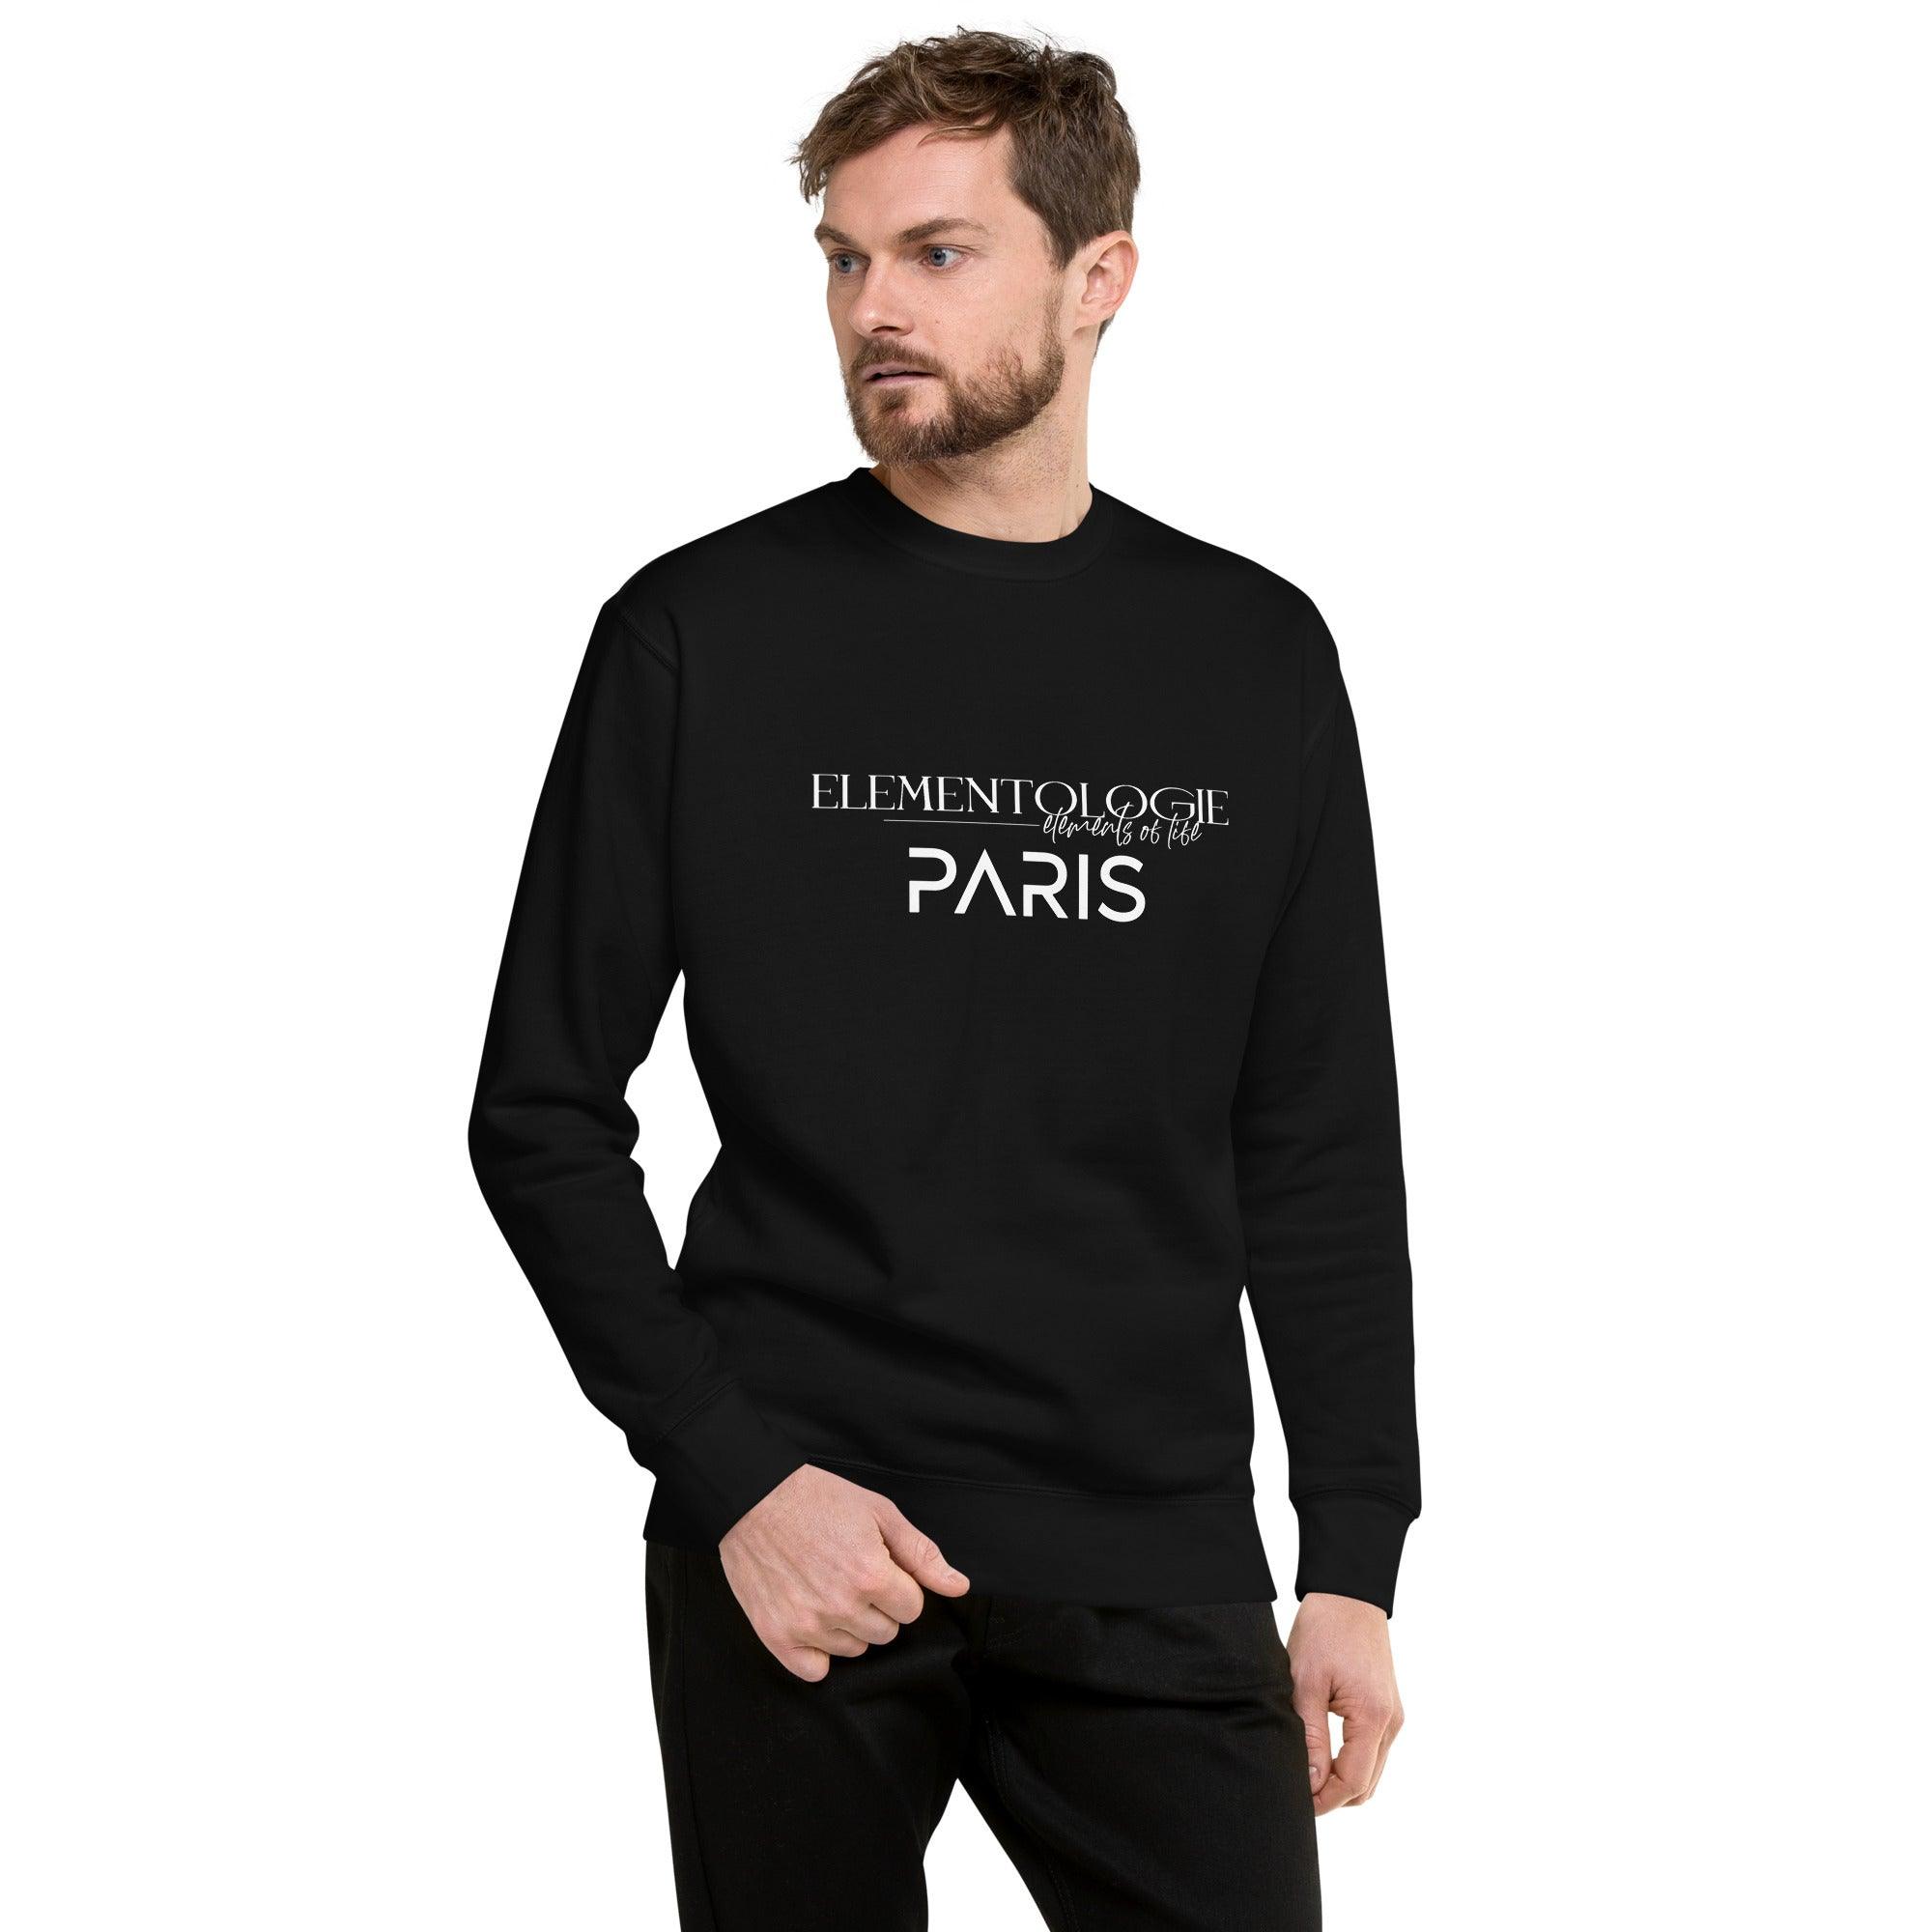 Unisex Premium Sweatshirt-Elementologie-Paris - Elementologie